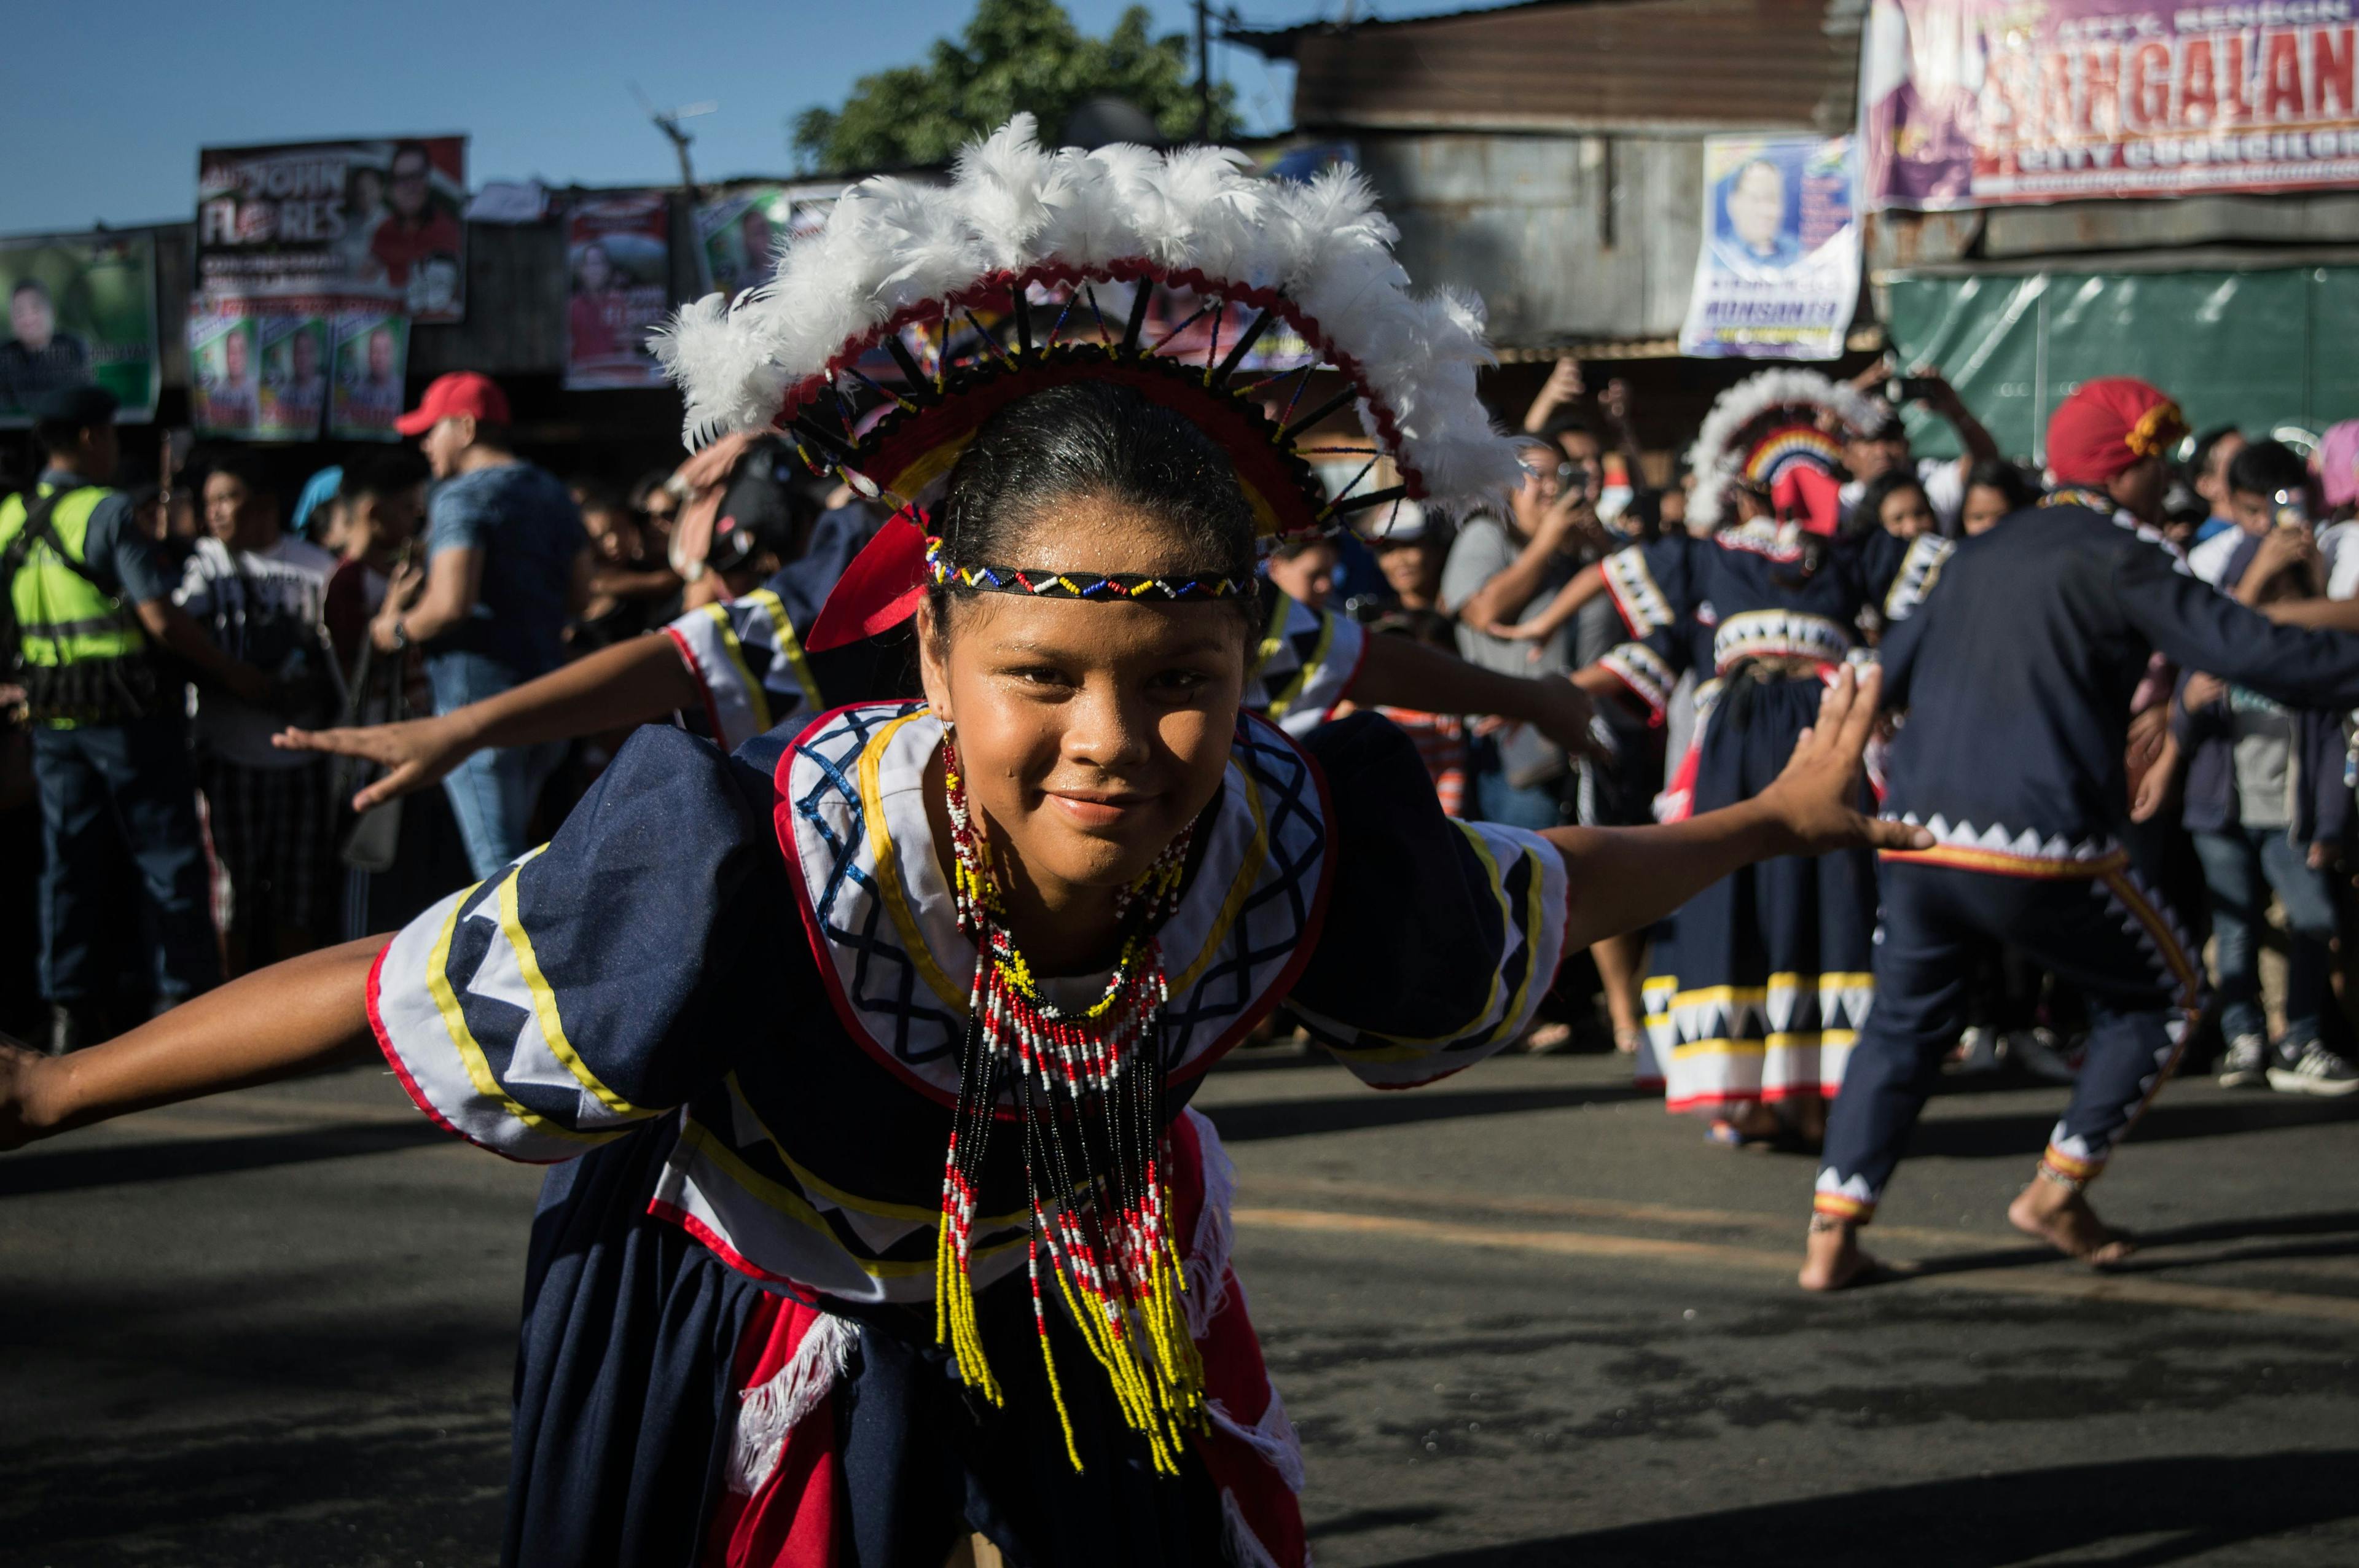 Girl dancing on the street festivities in Malaybalay, Bukidnon, Philippines.